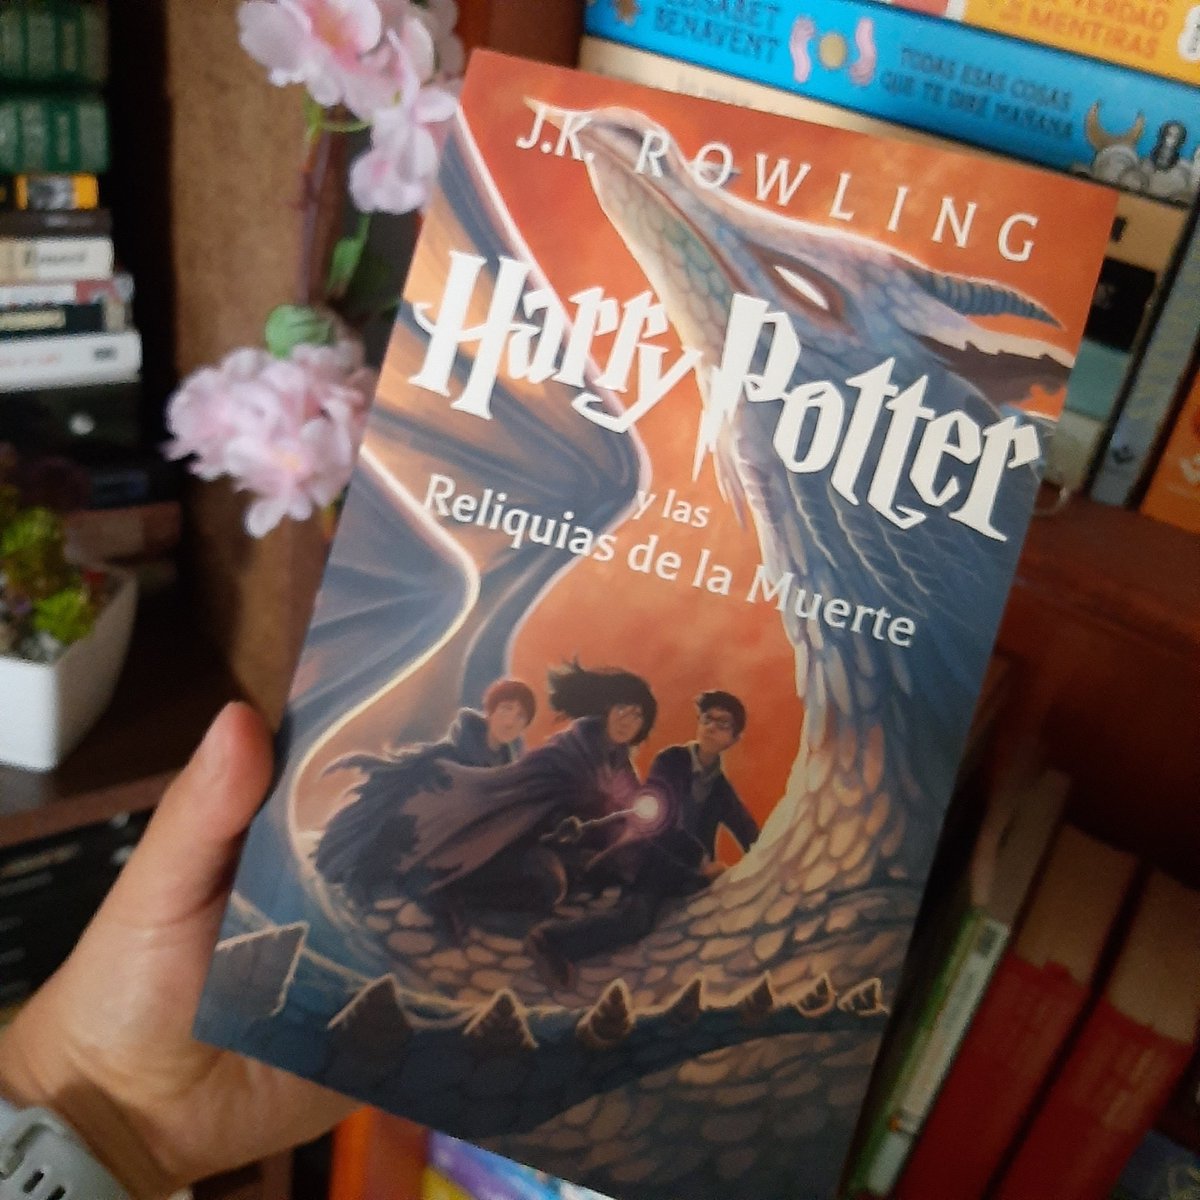 'La muerte es simplemente la siguiente gran aventura' Albus Dumbledore.
#harrypotter #harrypotterfan #harrypottercollection #harrypotterbooks
instagram.com/p/C6tr-yHuPwr/…